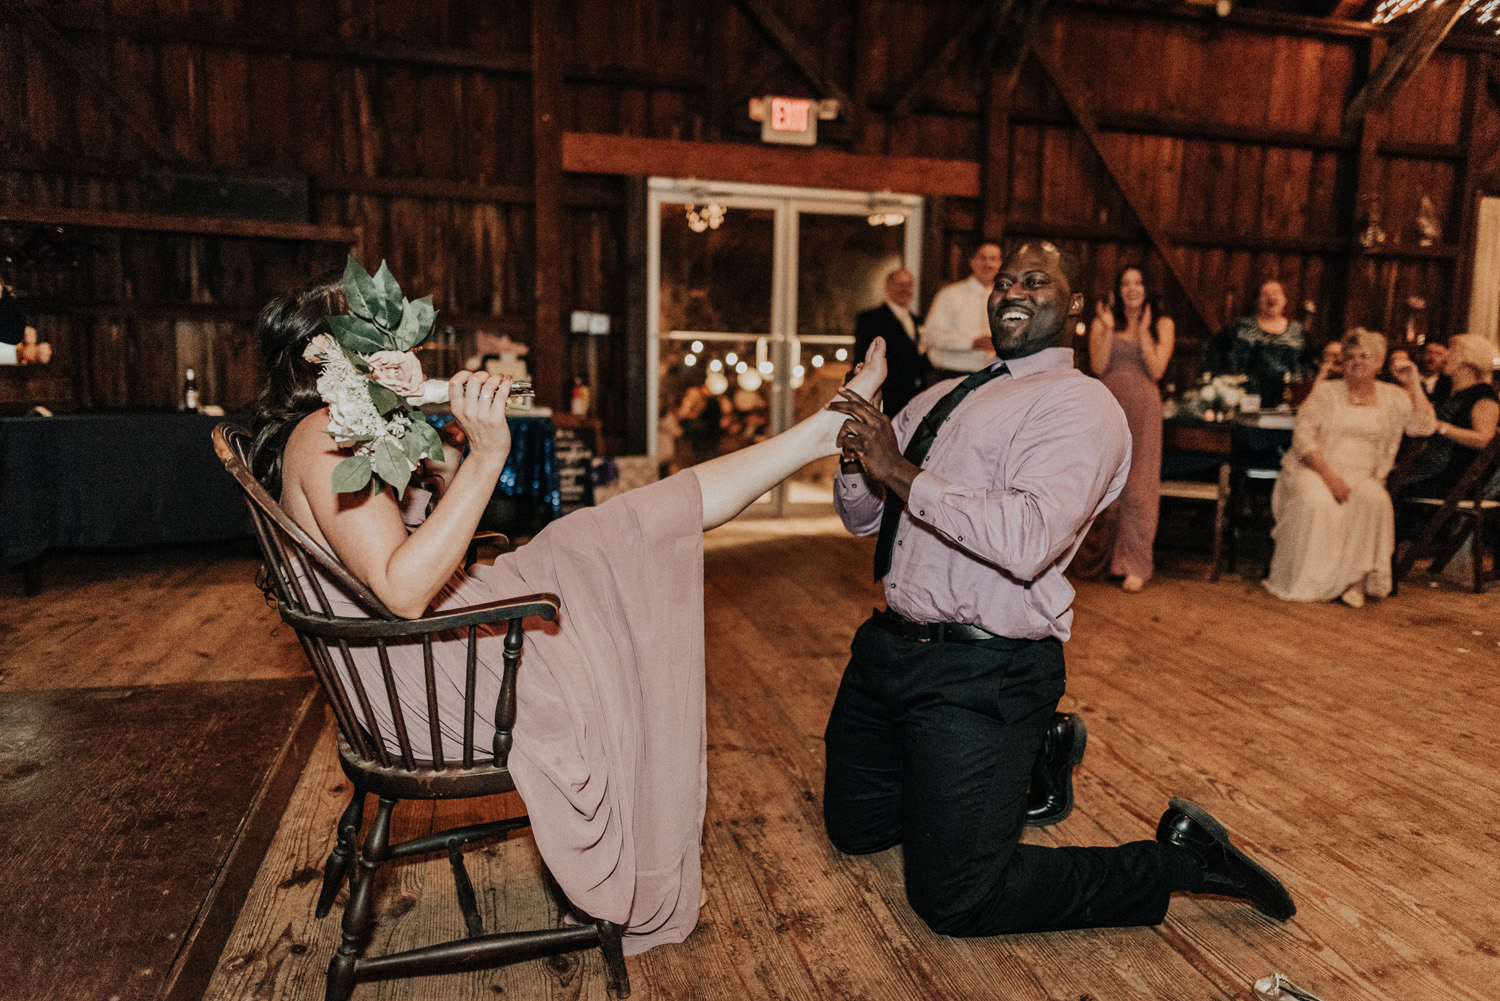 KyleWillisPhoto-kyle-willis-photography-rodes-barn-wedding-swedesboro-new-jersey-philadelphia-lillian-west-faux-bouquets-rustic-south-new-york-city